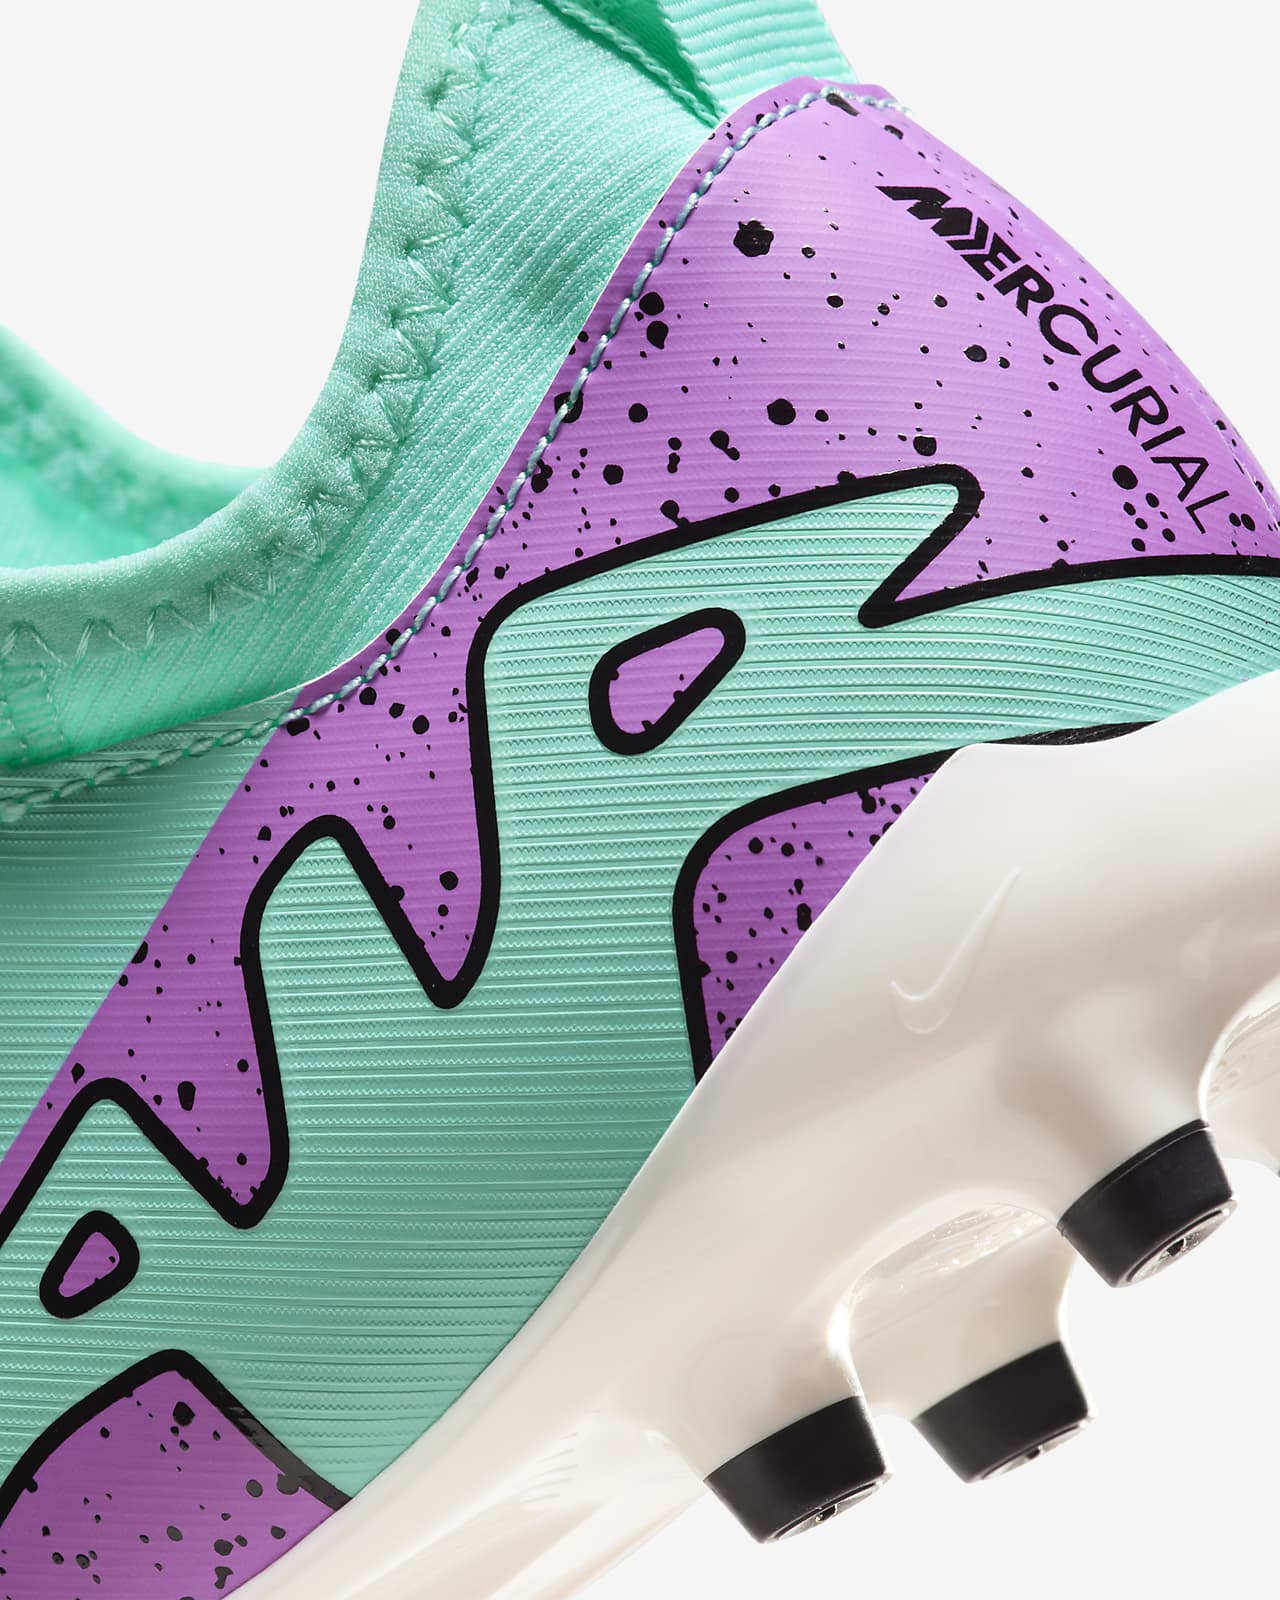 Chaussures de Football Nike Mercurial Vapor 15 Academy Turquoise pour Homme